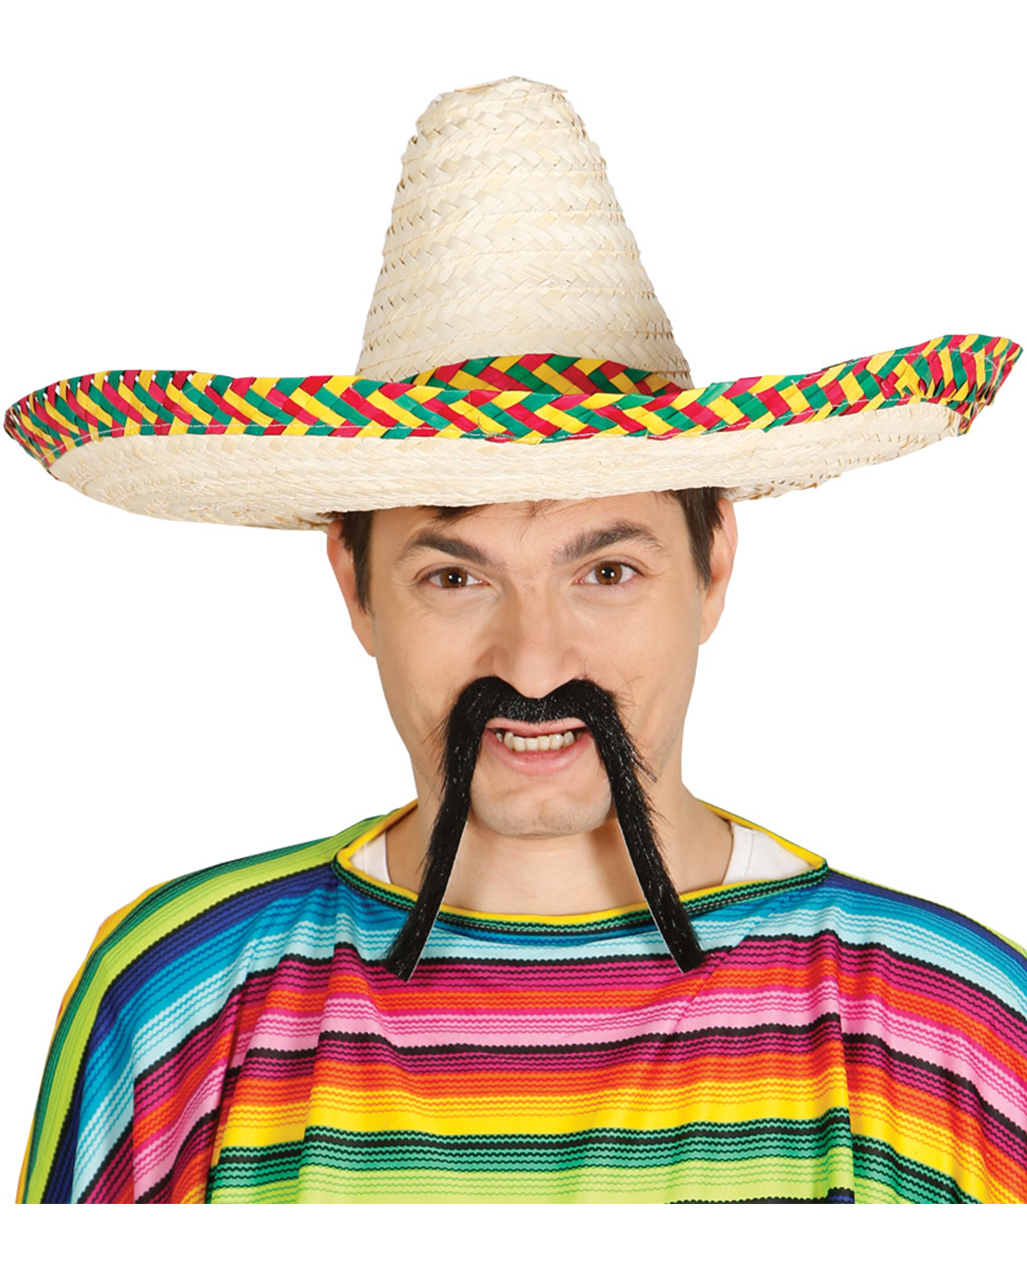 sombrero-mit-buntem-rand--mexiko-kostuemparty-accessoires--mexico-mottoparty-zubehoer--29066_1.jpg